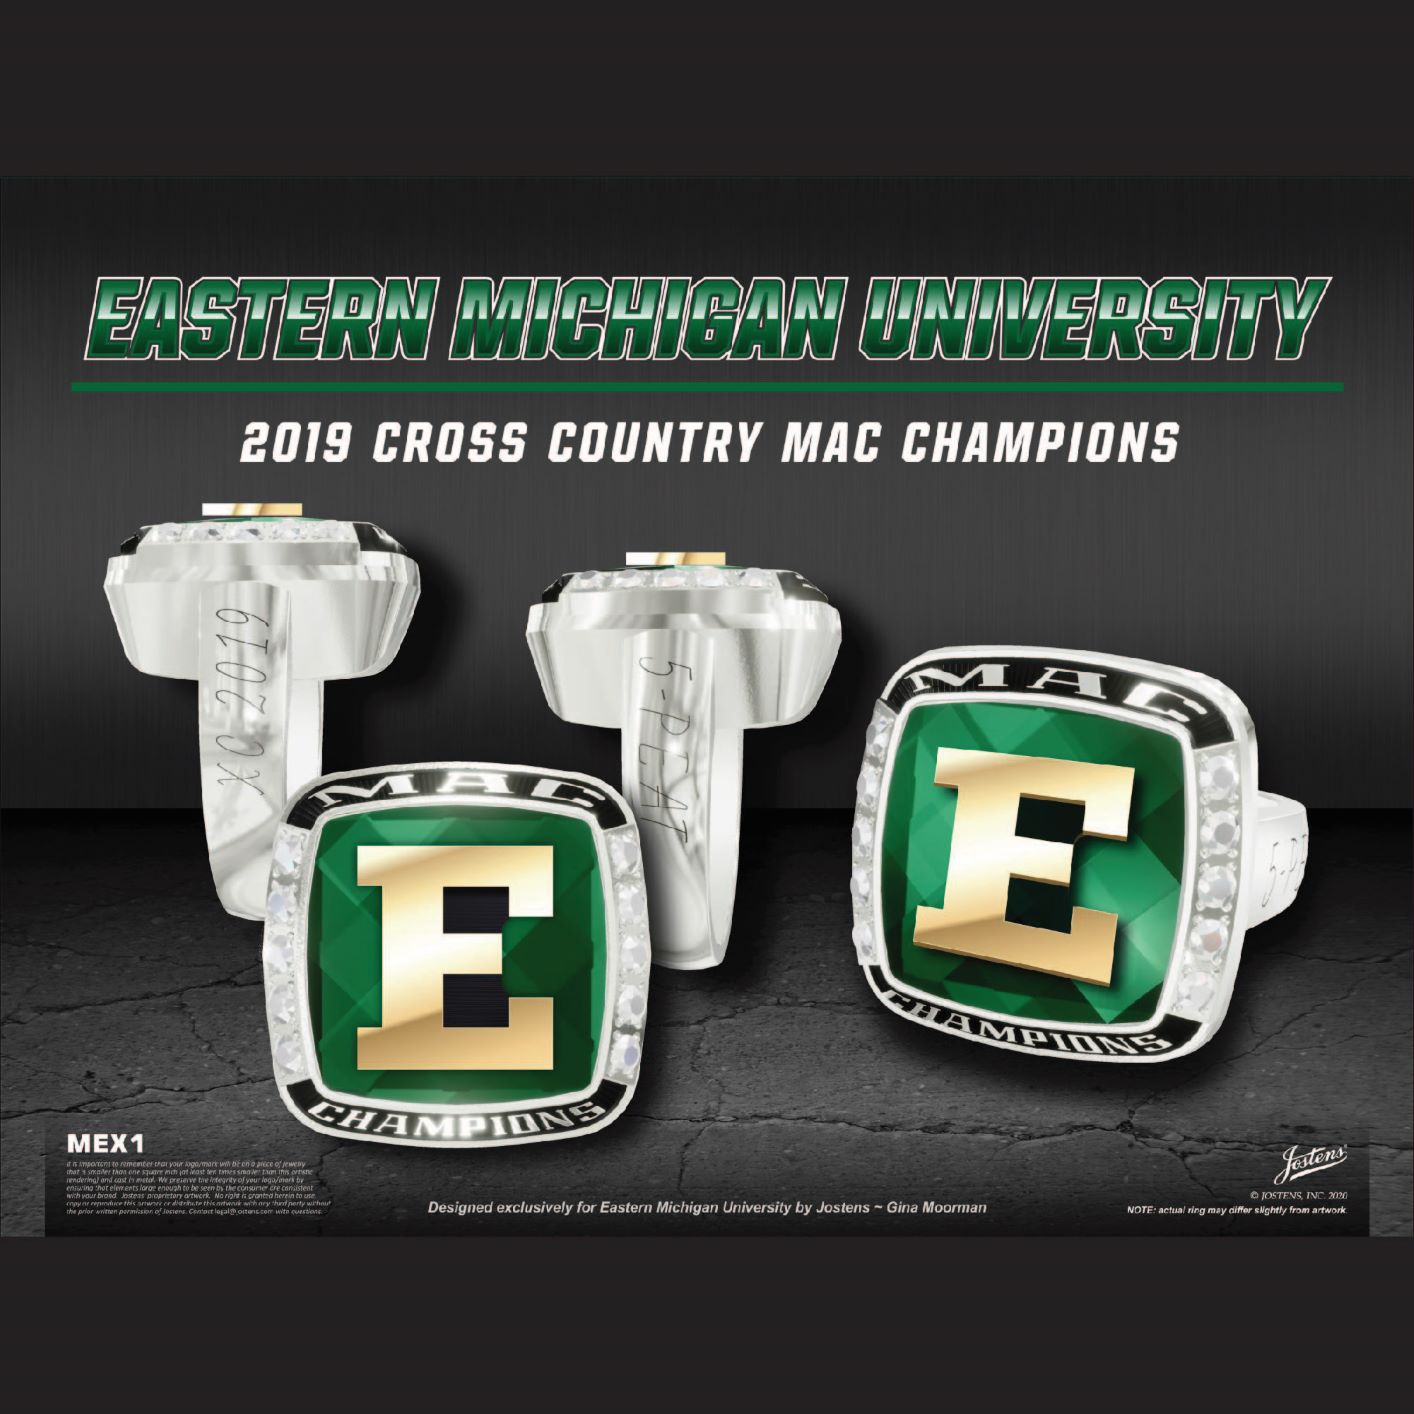 Eastern Michigan University Women's Cross Country 2019 MAC Championship Ring